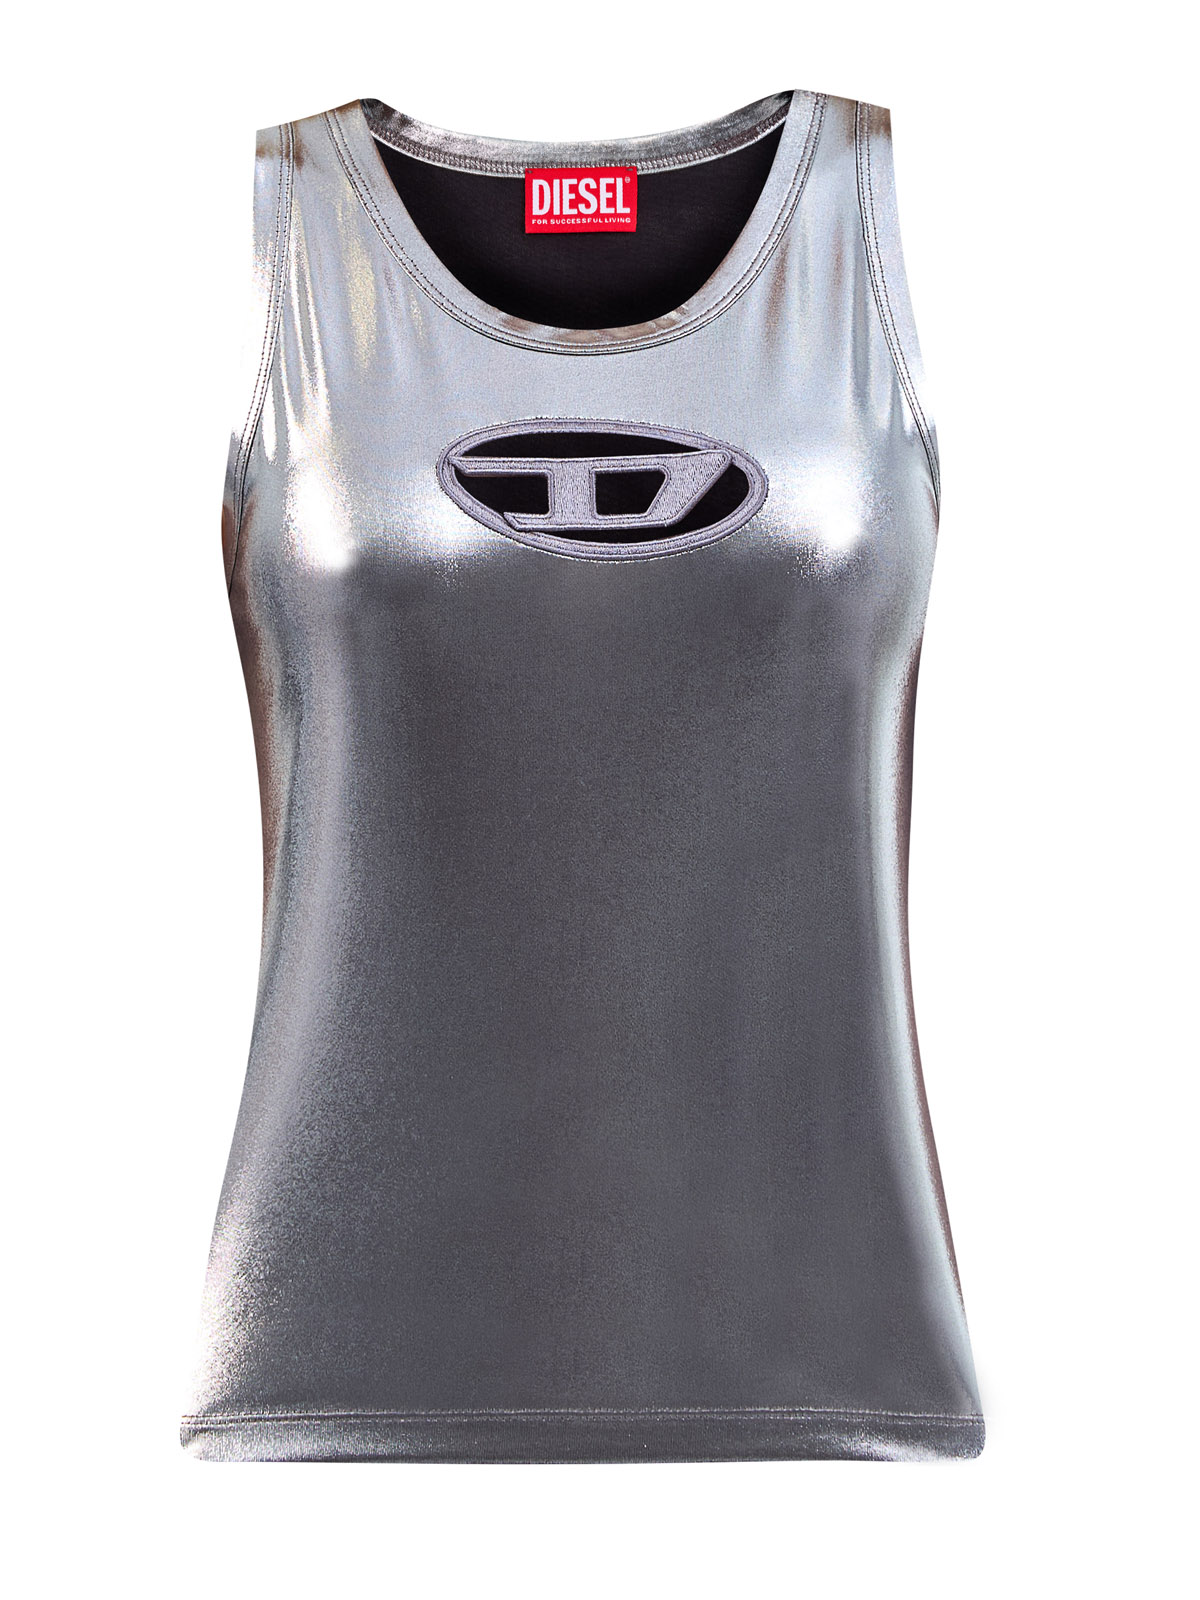 Топ T-Lynys из металлизированной ткани с лазерным логотипом Oval D DIESEL, цвет серый, размер S;M;L